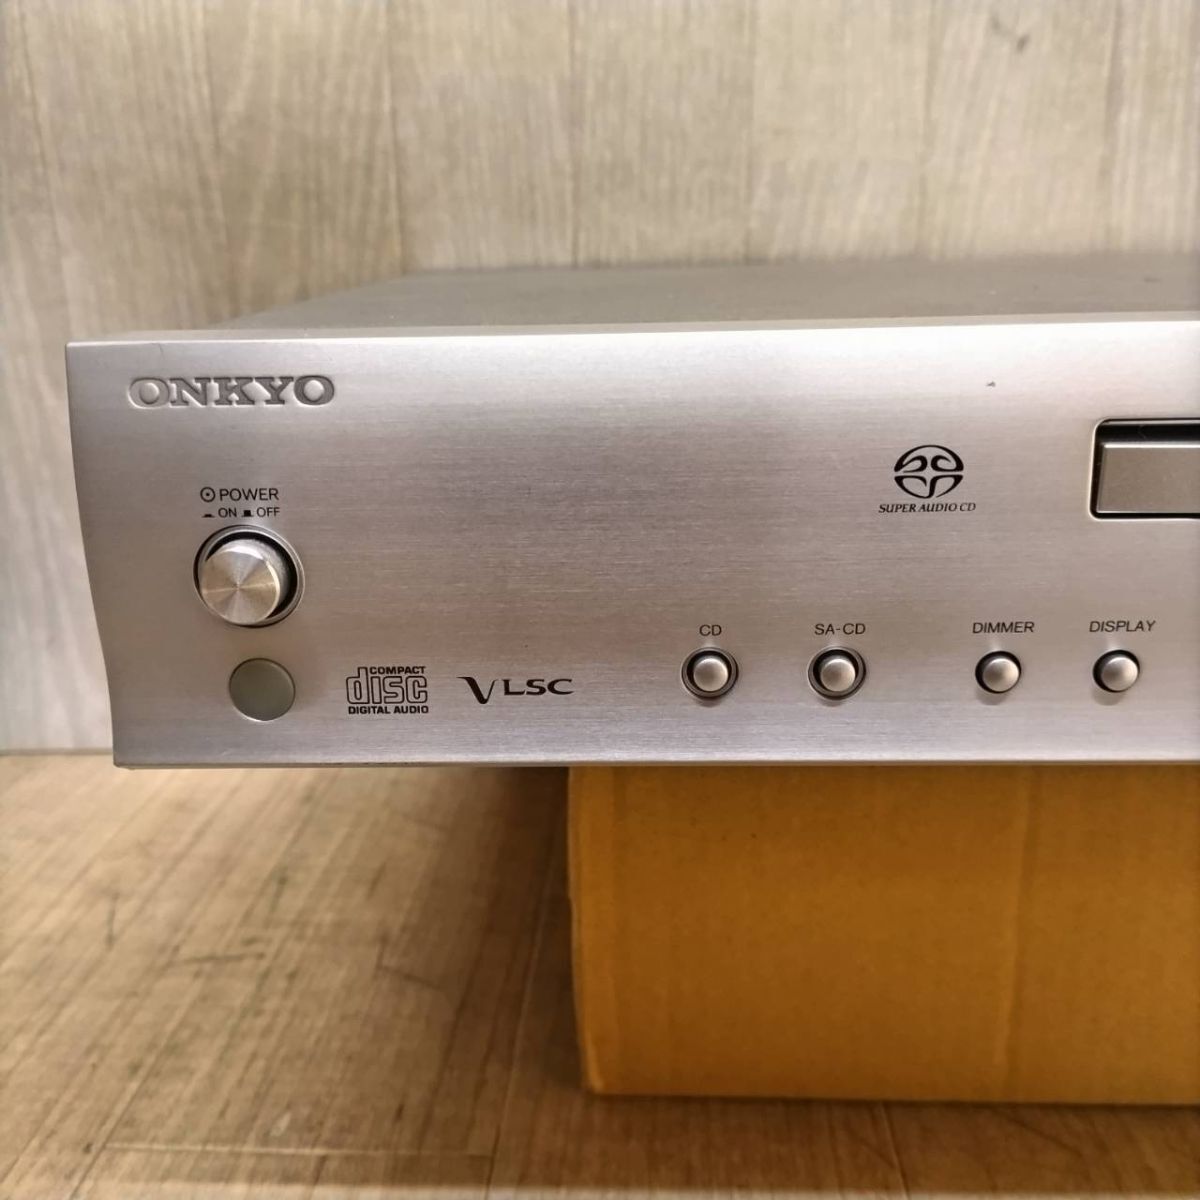 F627-SK10-859 ONKYO Onkyo C-S5VL super audio CD player silver electrification has confirmed ⑥